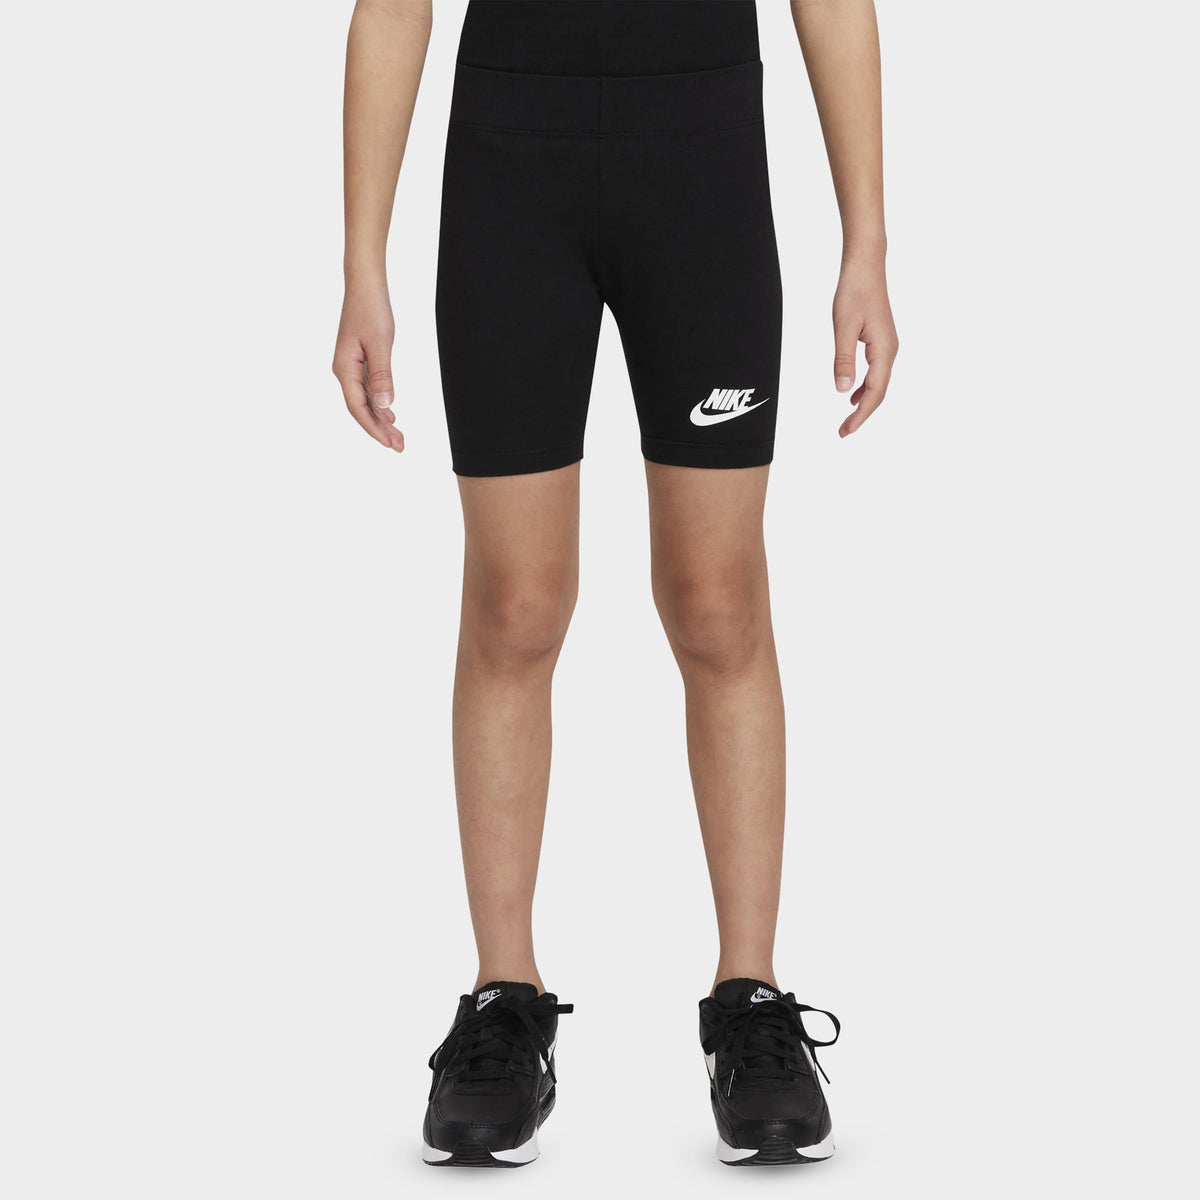 Nike Child Girls' Bike Shorts / Black